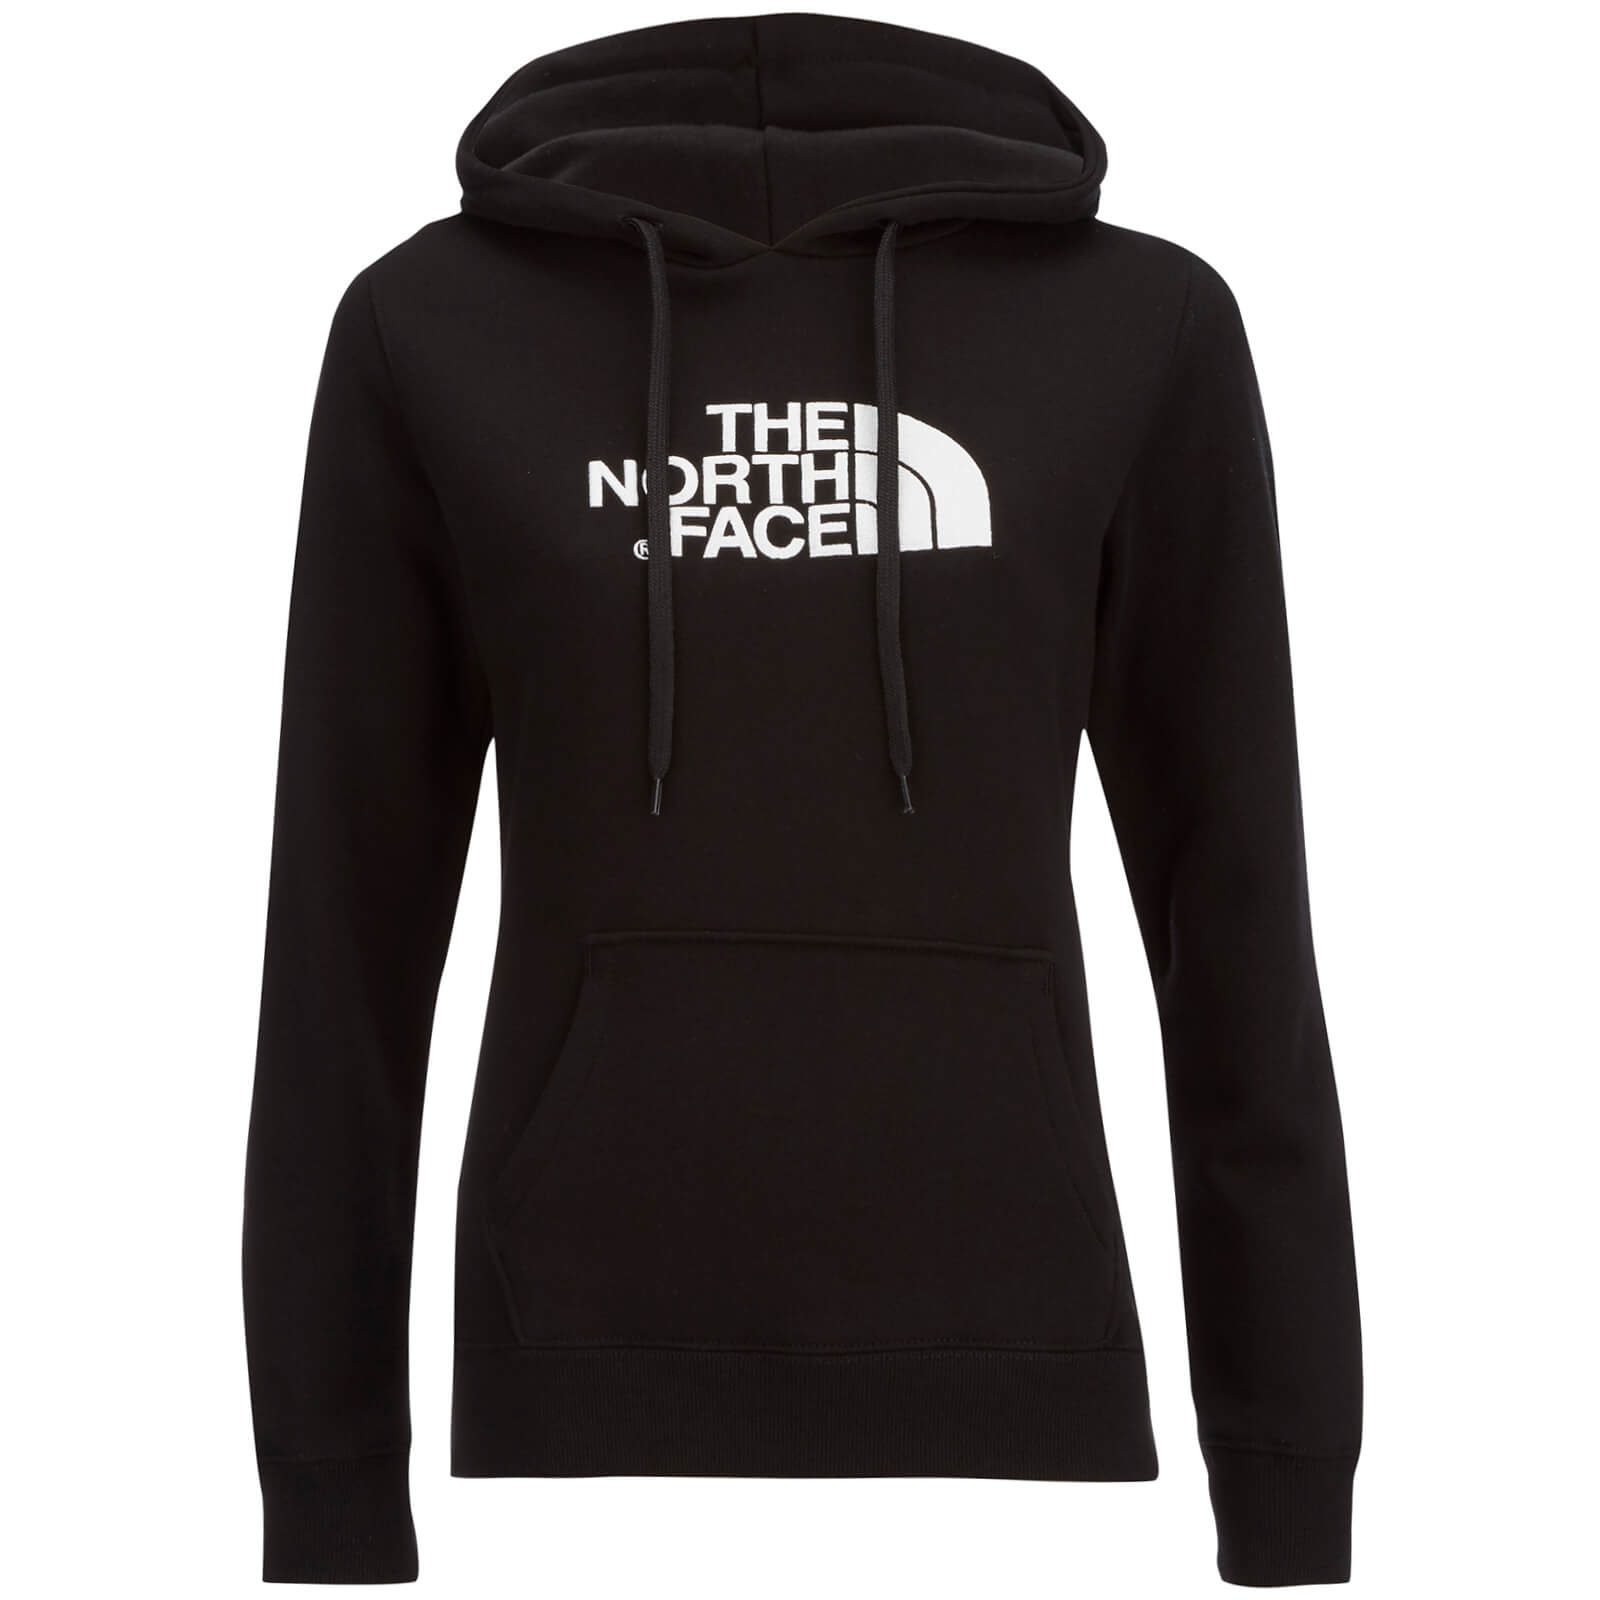 The North Face Women's Drew Peak Pullover Hoody - TNF Black - XS - Black